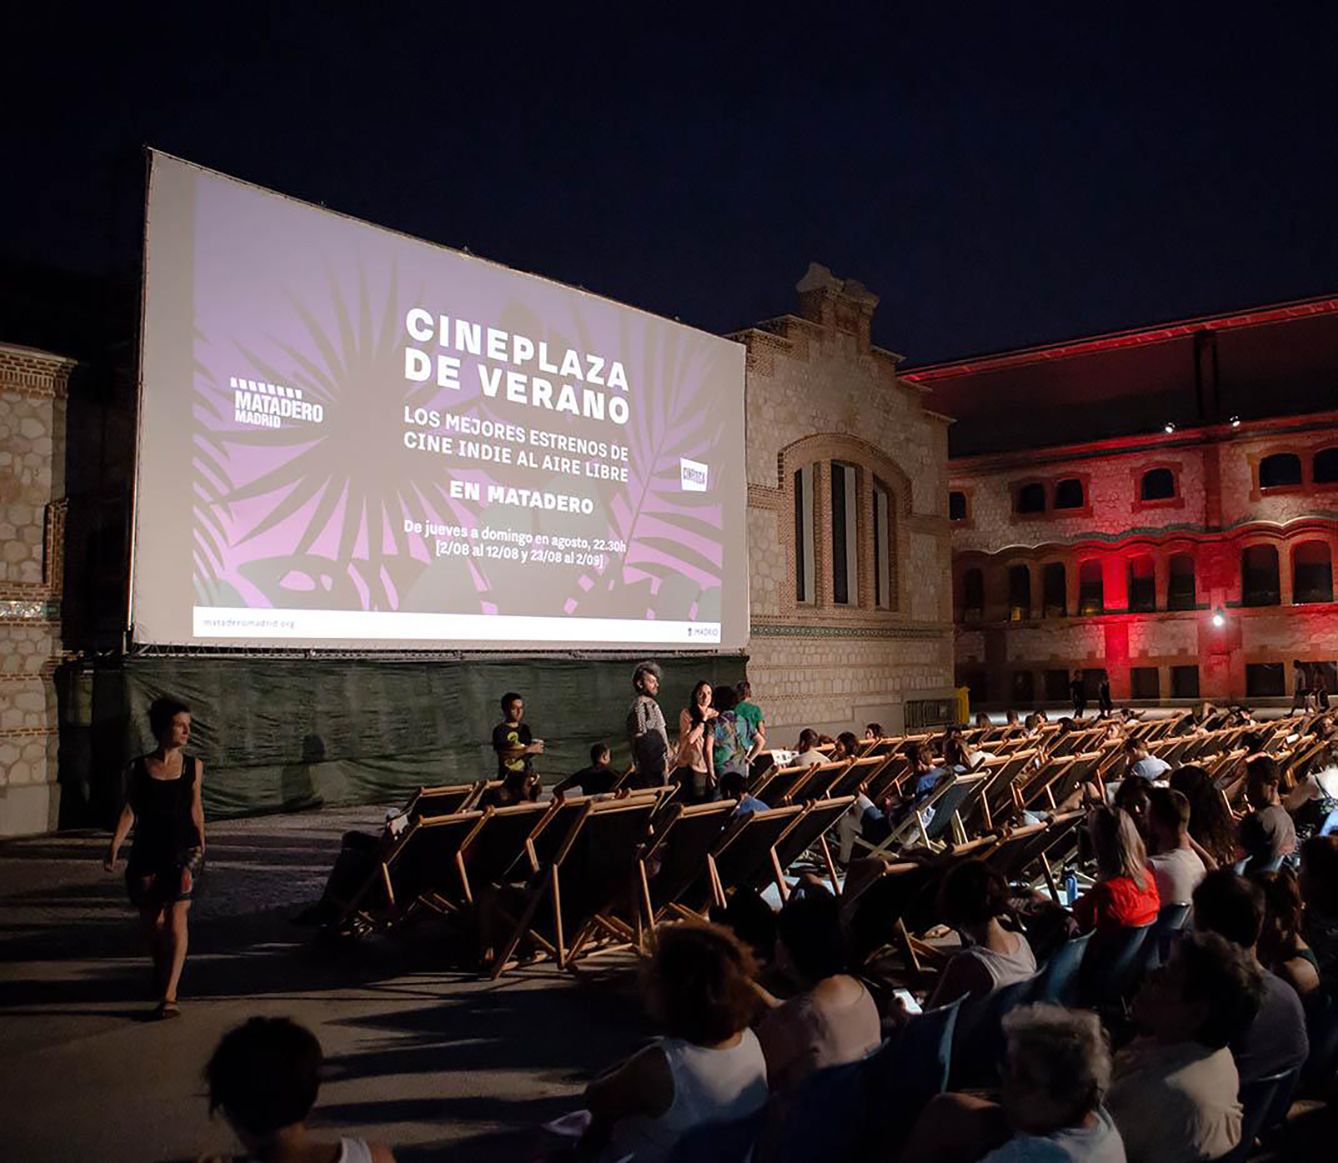 El mejor cine inédito al aire libre regresa a Matadero Madrid